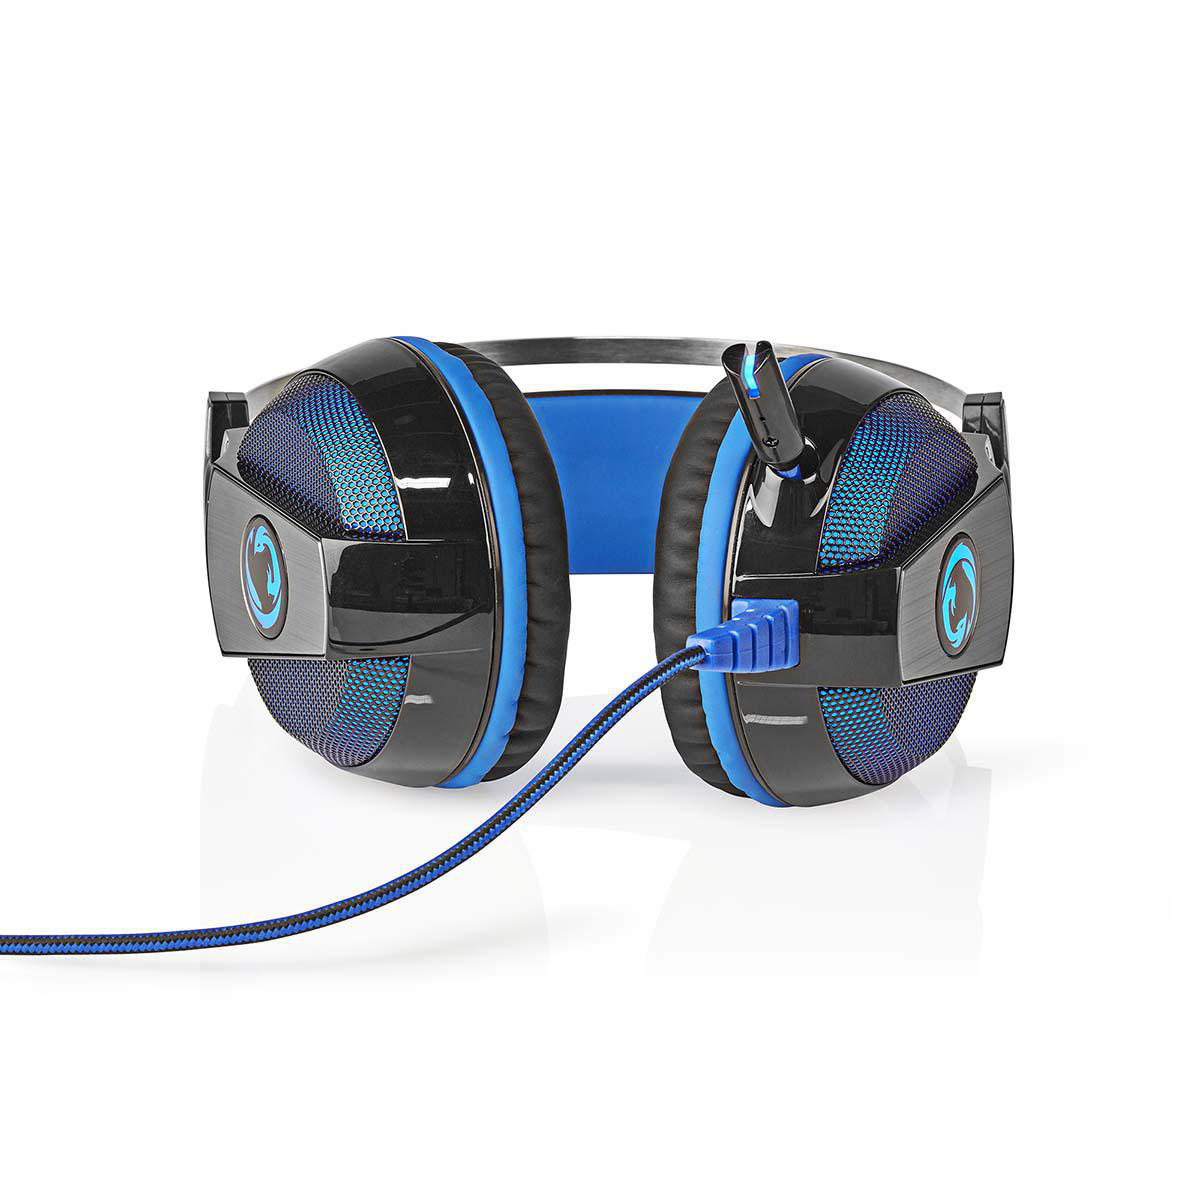 blau / NEDIS Gaming-Headset schwarz 500BK, On-ear